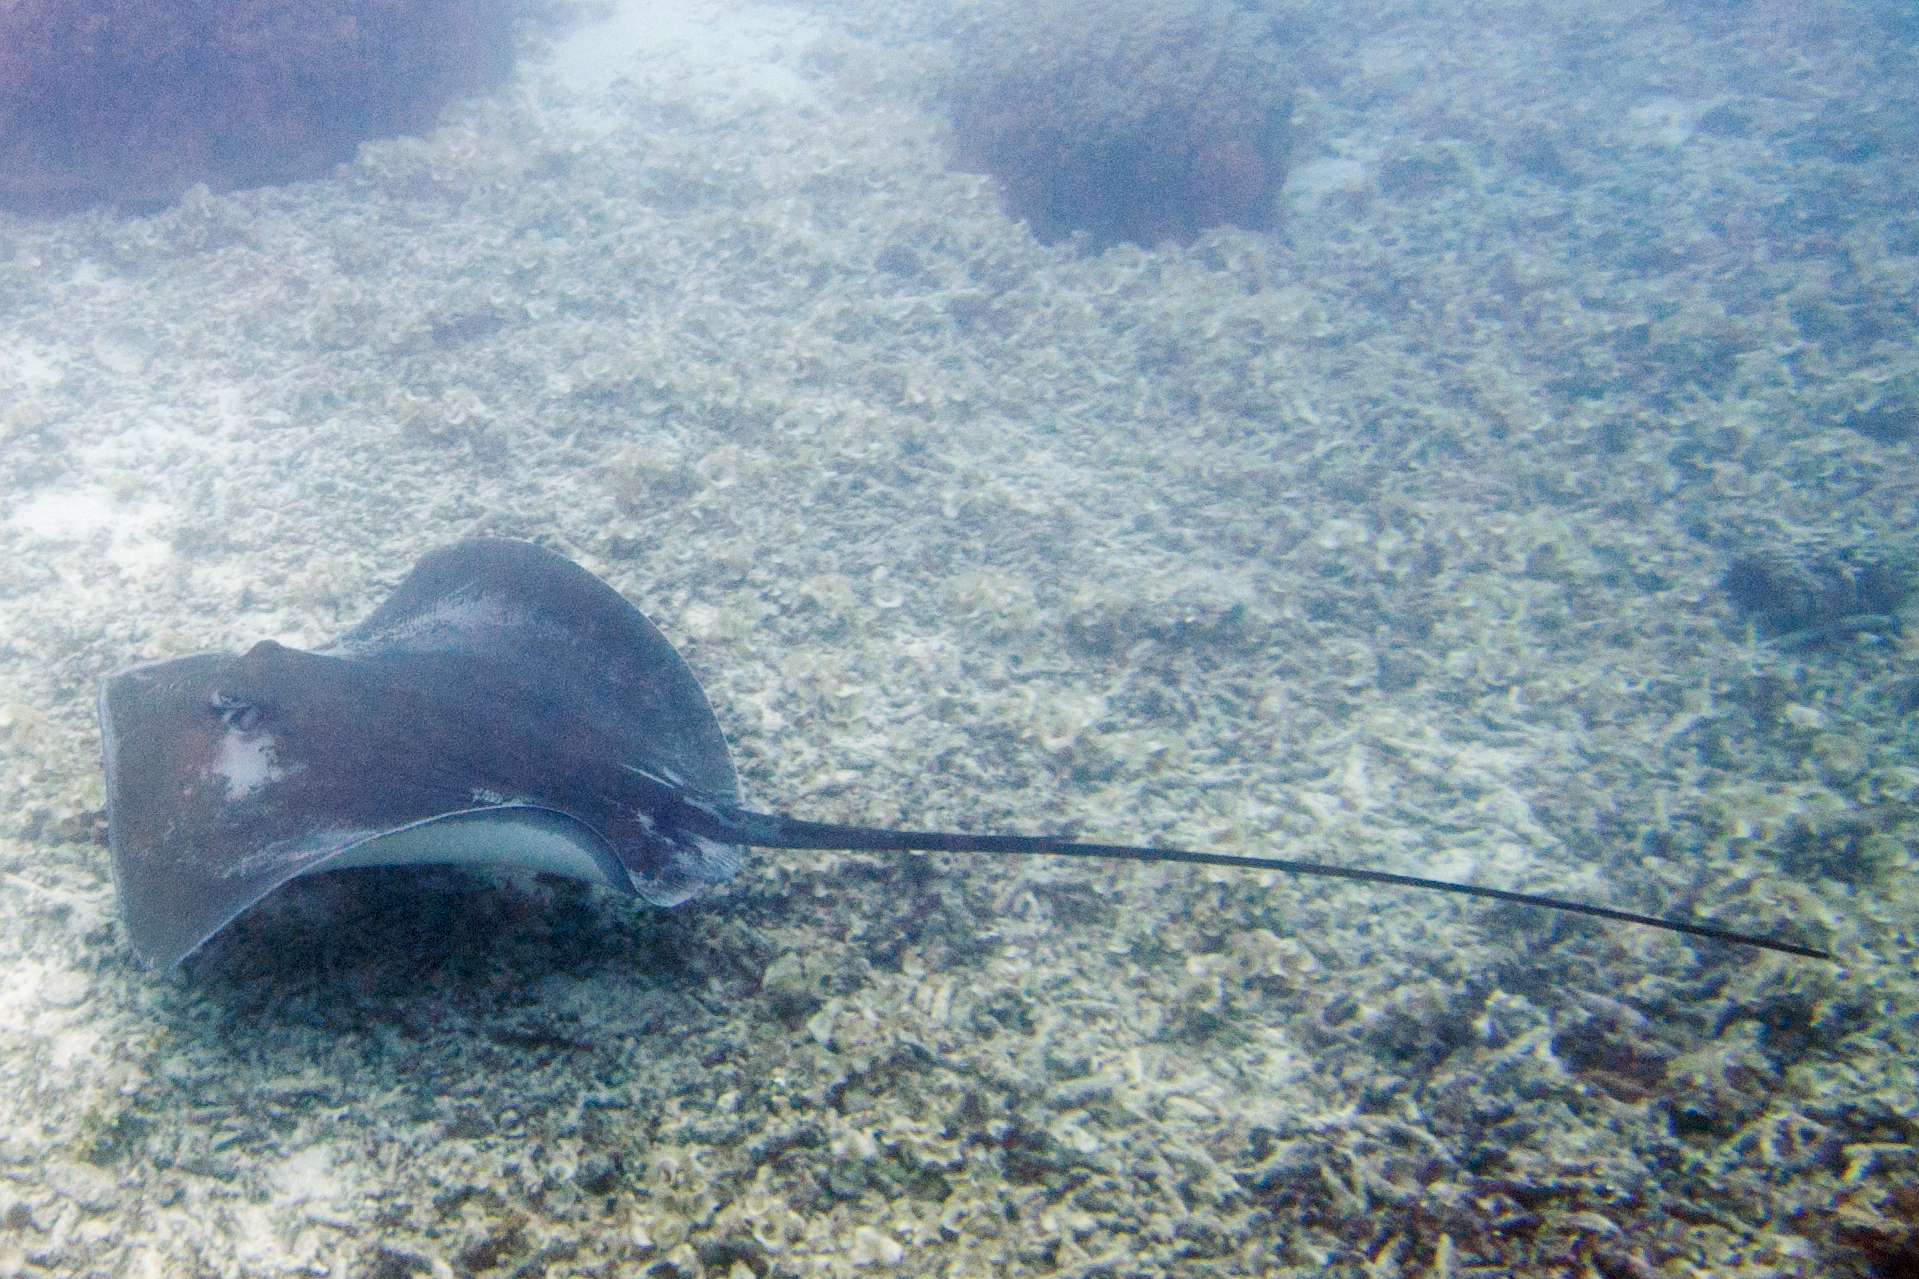 a stingfish resting on a sea floor